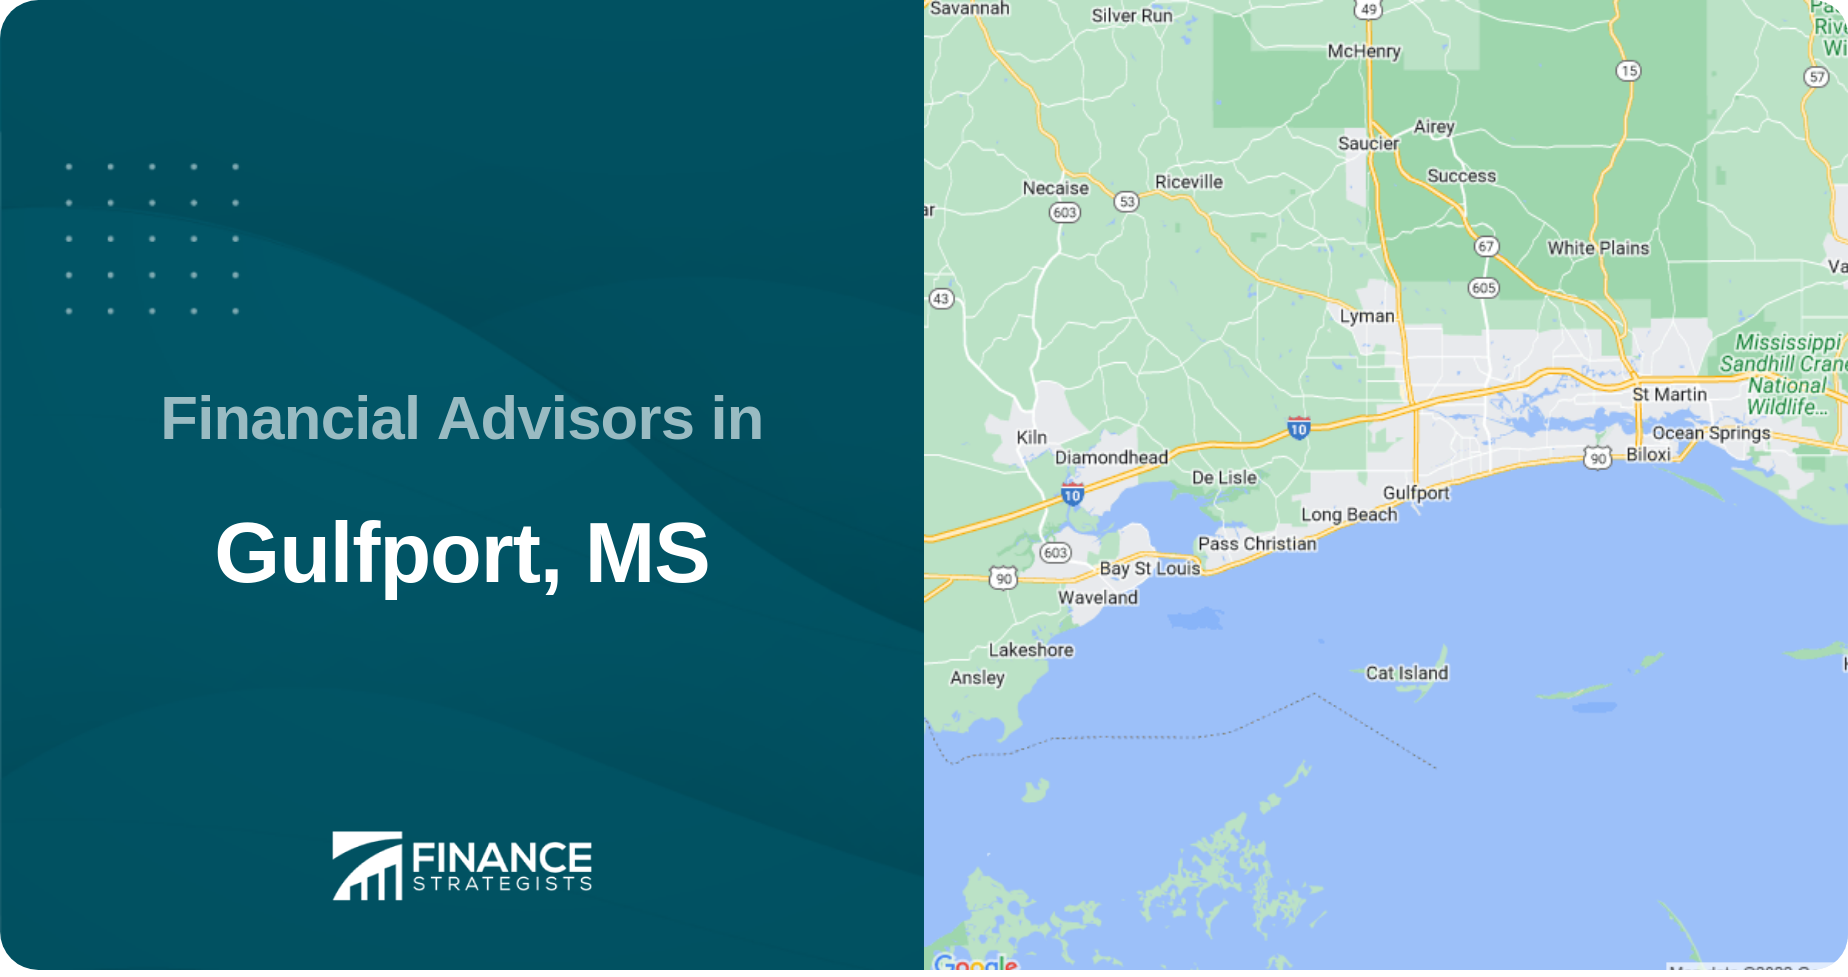 Financial Advisors in Gulfport, MS